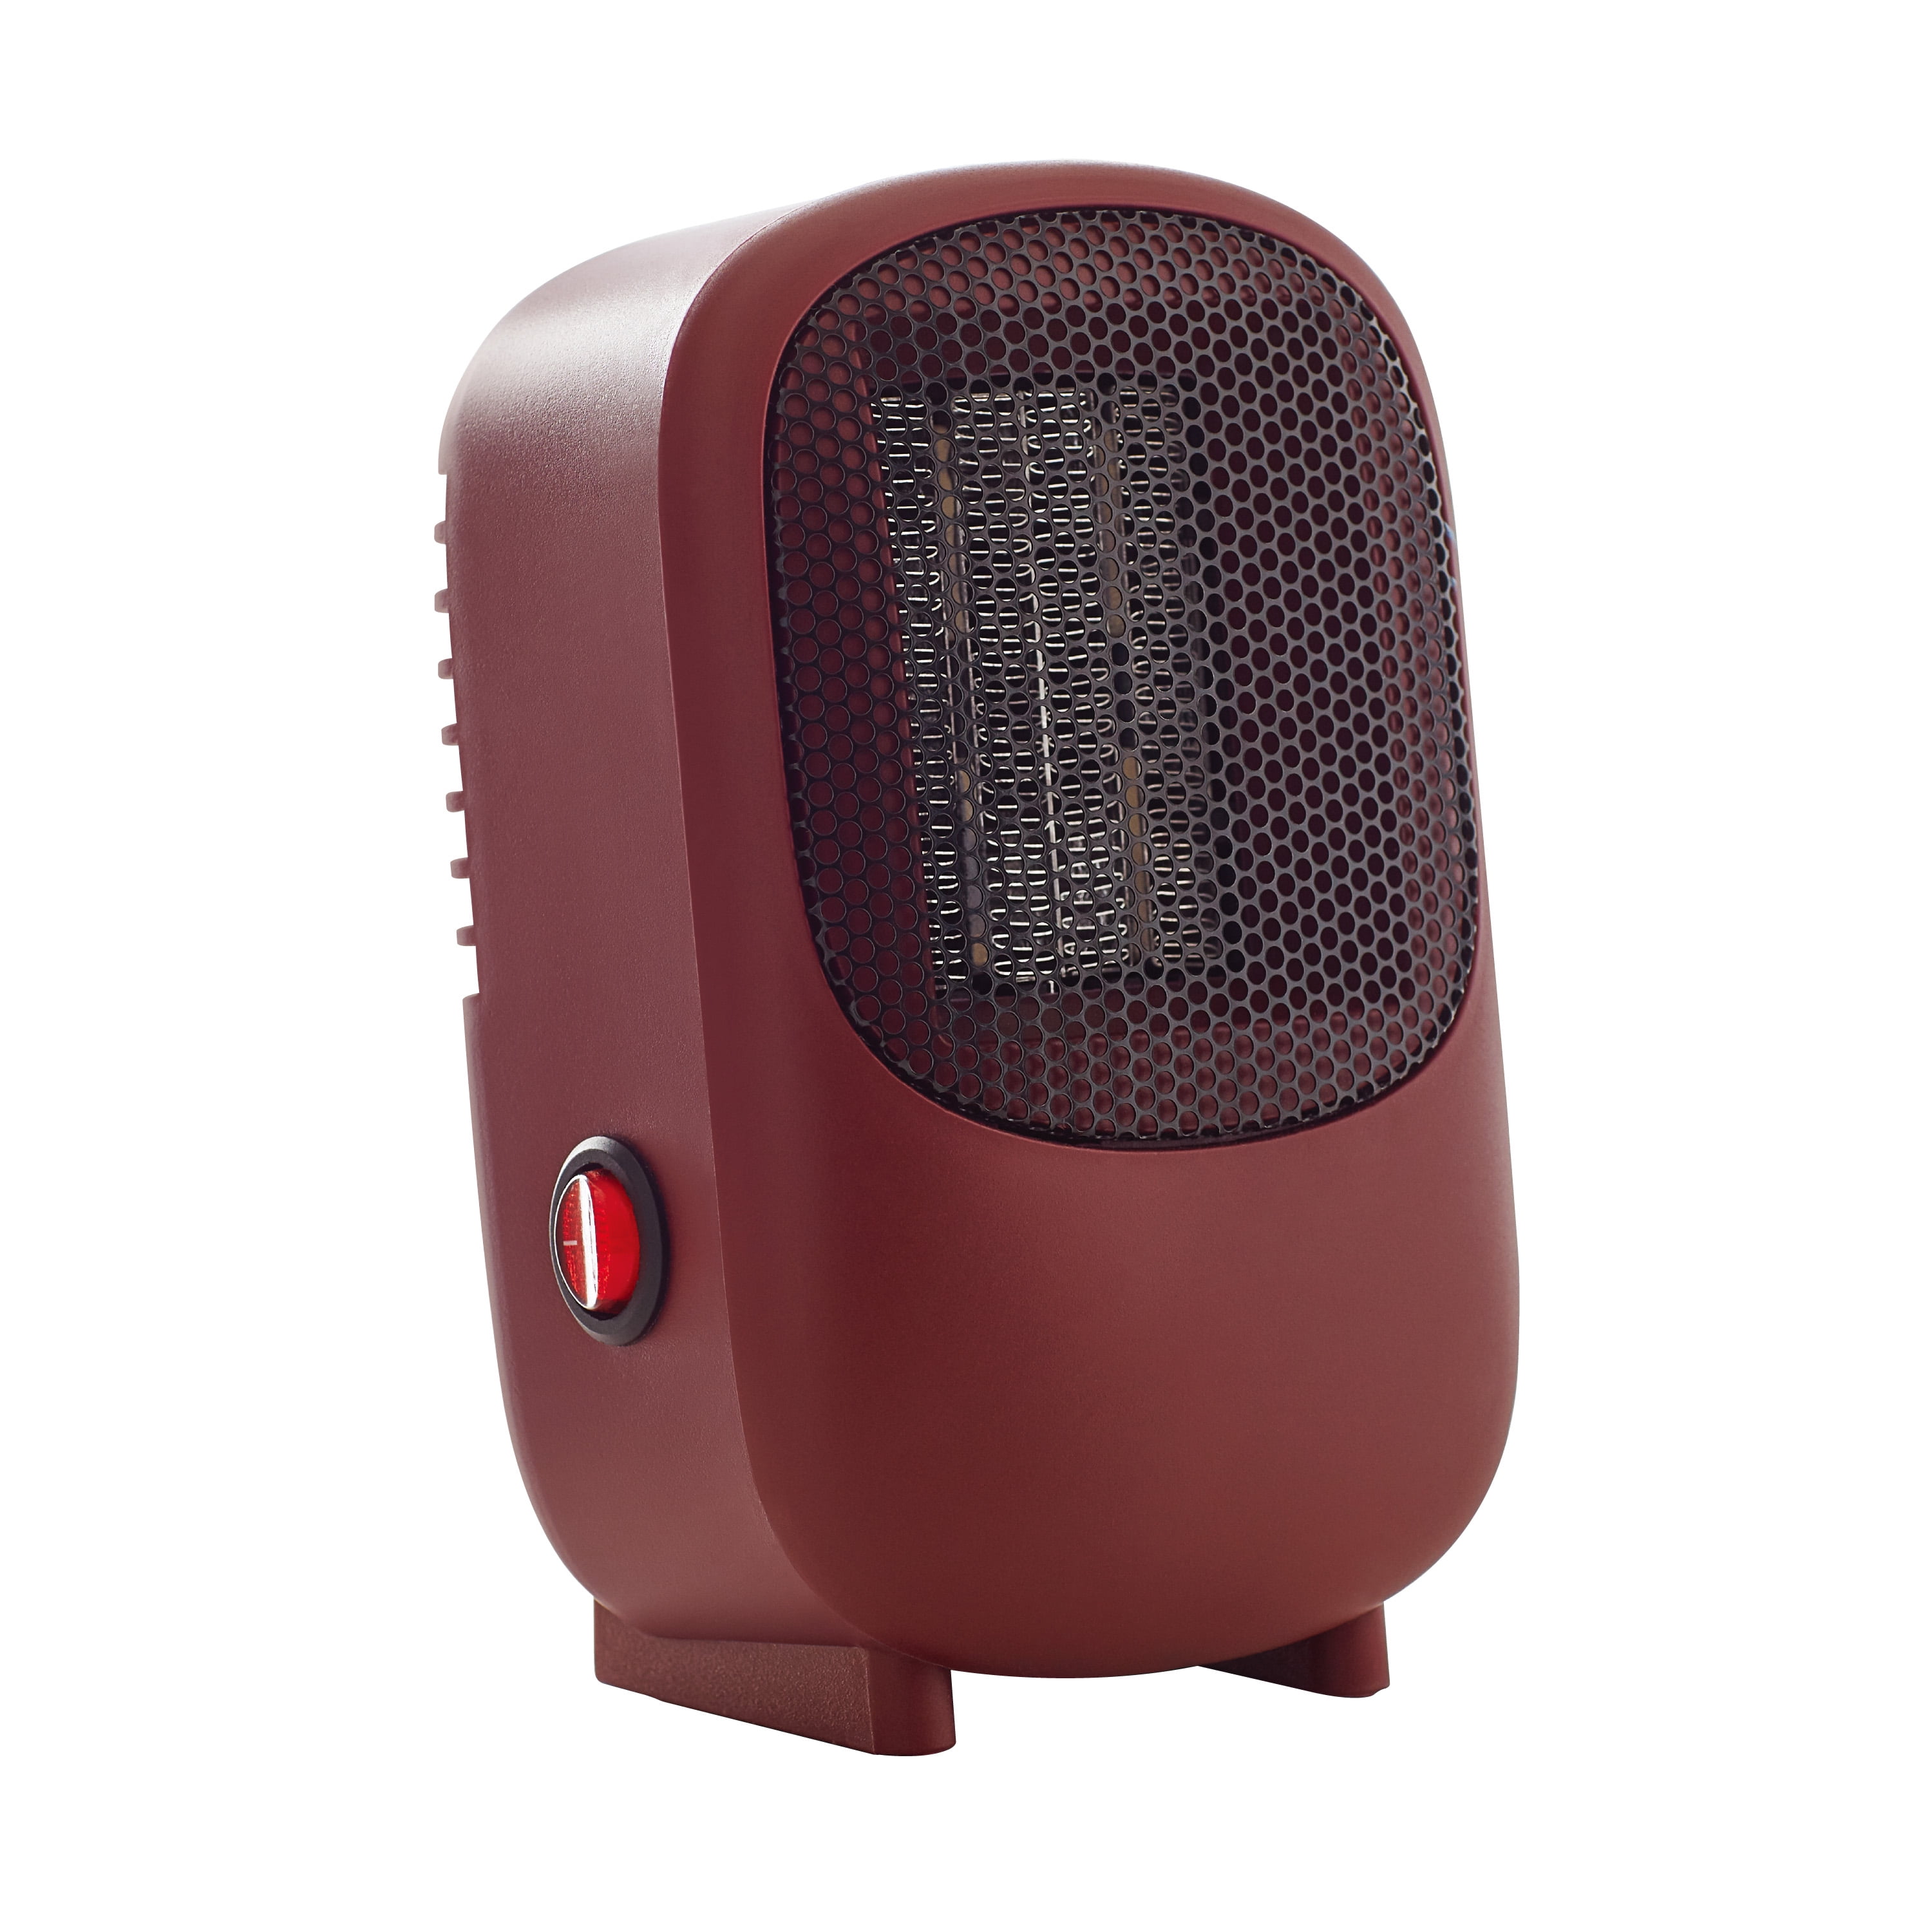 Mainstays Personal Mini Electric Ceramic Heater 350W Indoor